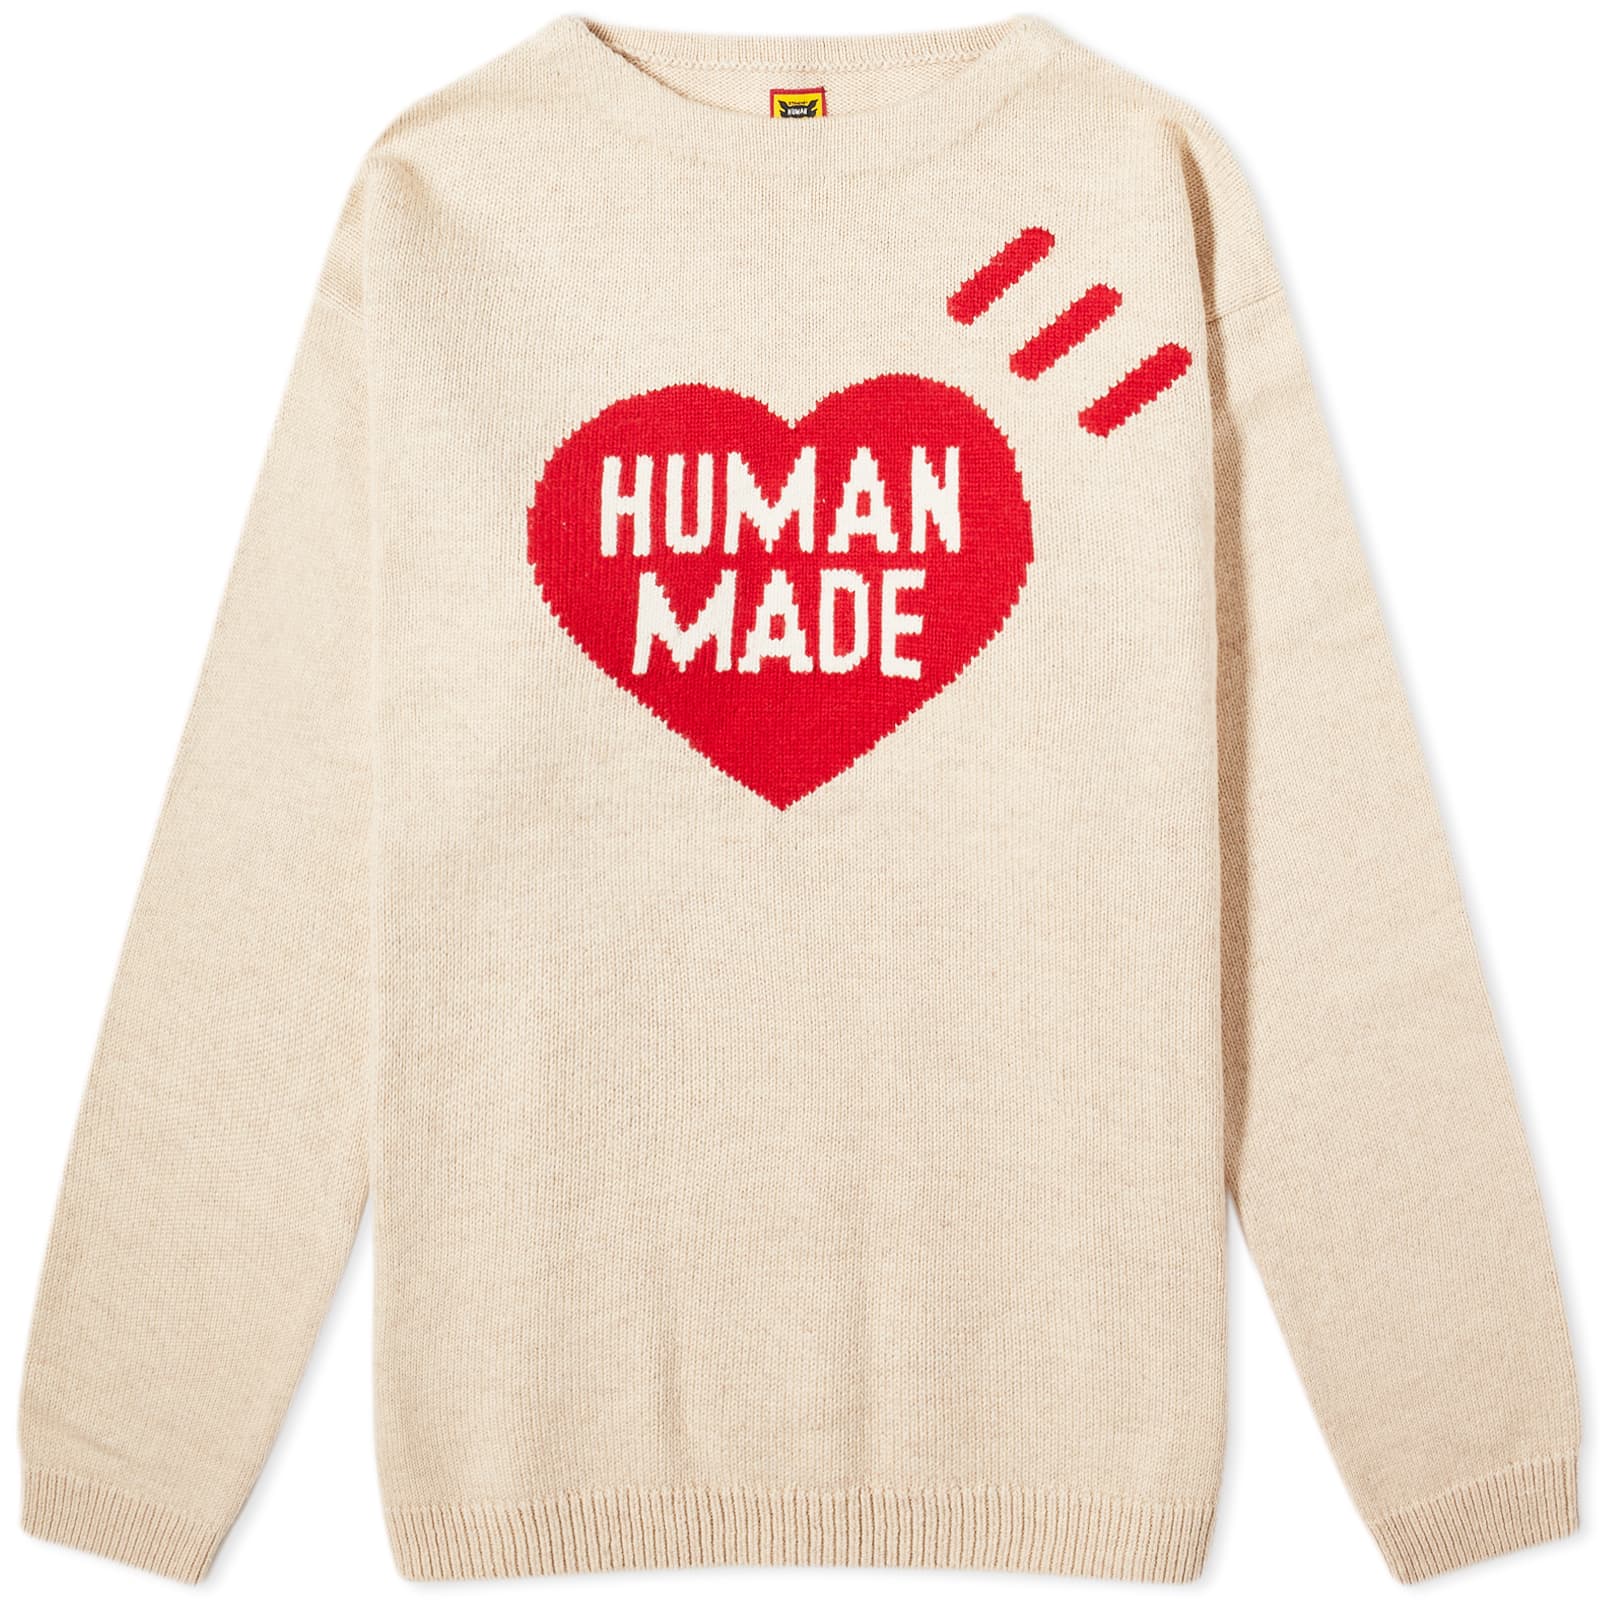 Свитер Human Made Heart Knit, бежевый human made sweater men women 1 1 best quality cartoon polar bear pattern knit sweatshirts human made crewneck